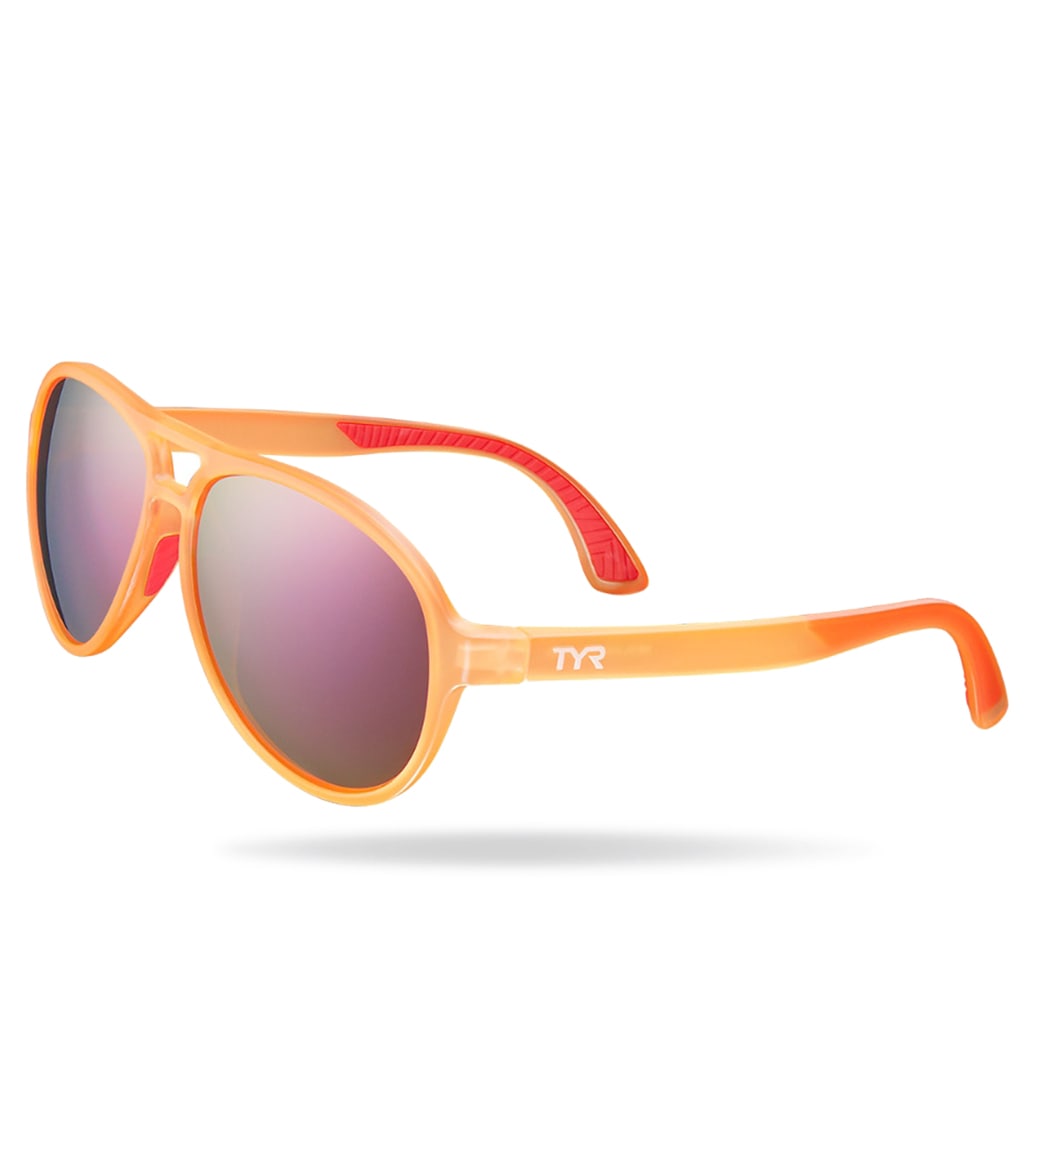 TYR Men's Newland Aviator Small Sunglasses - Pink/Orange - Swimoutlet.com